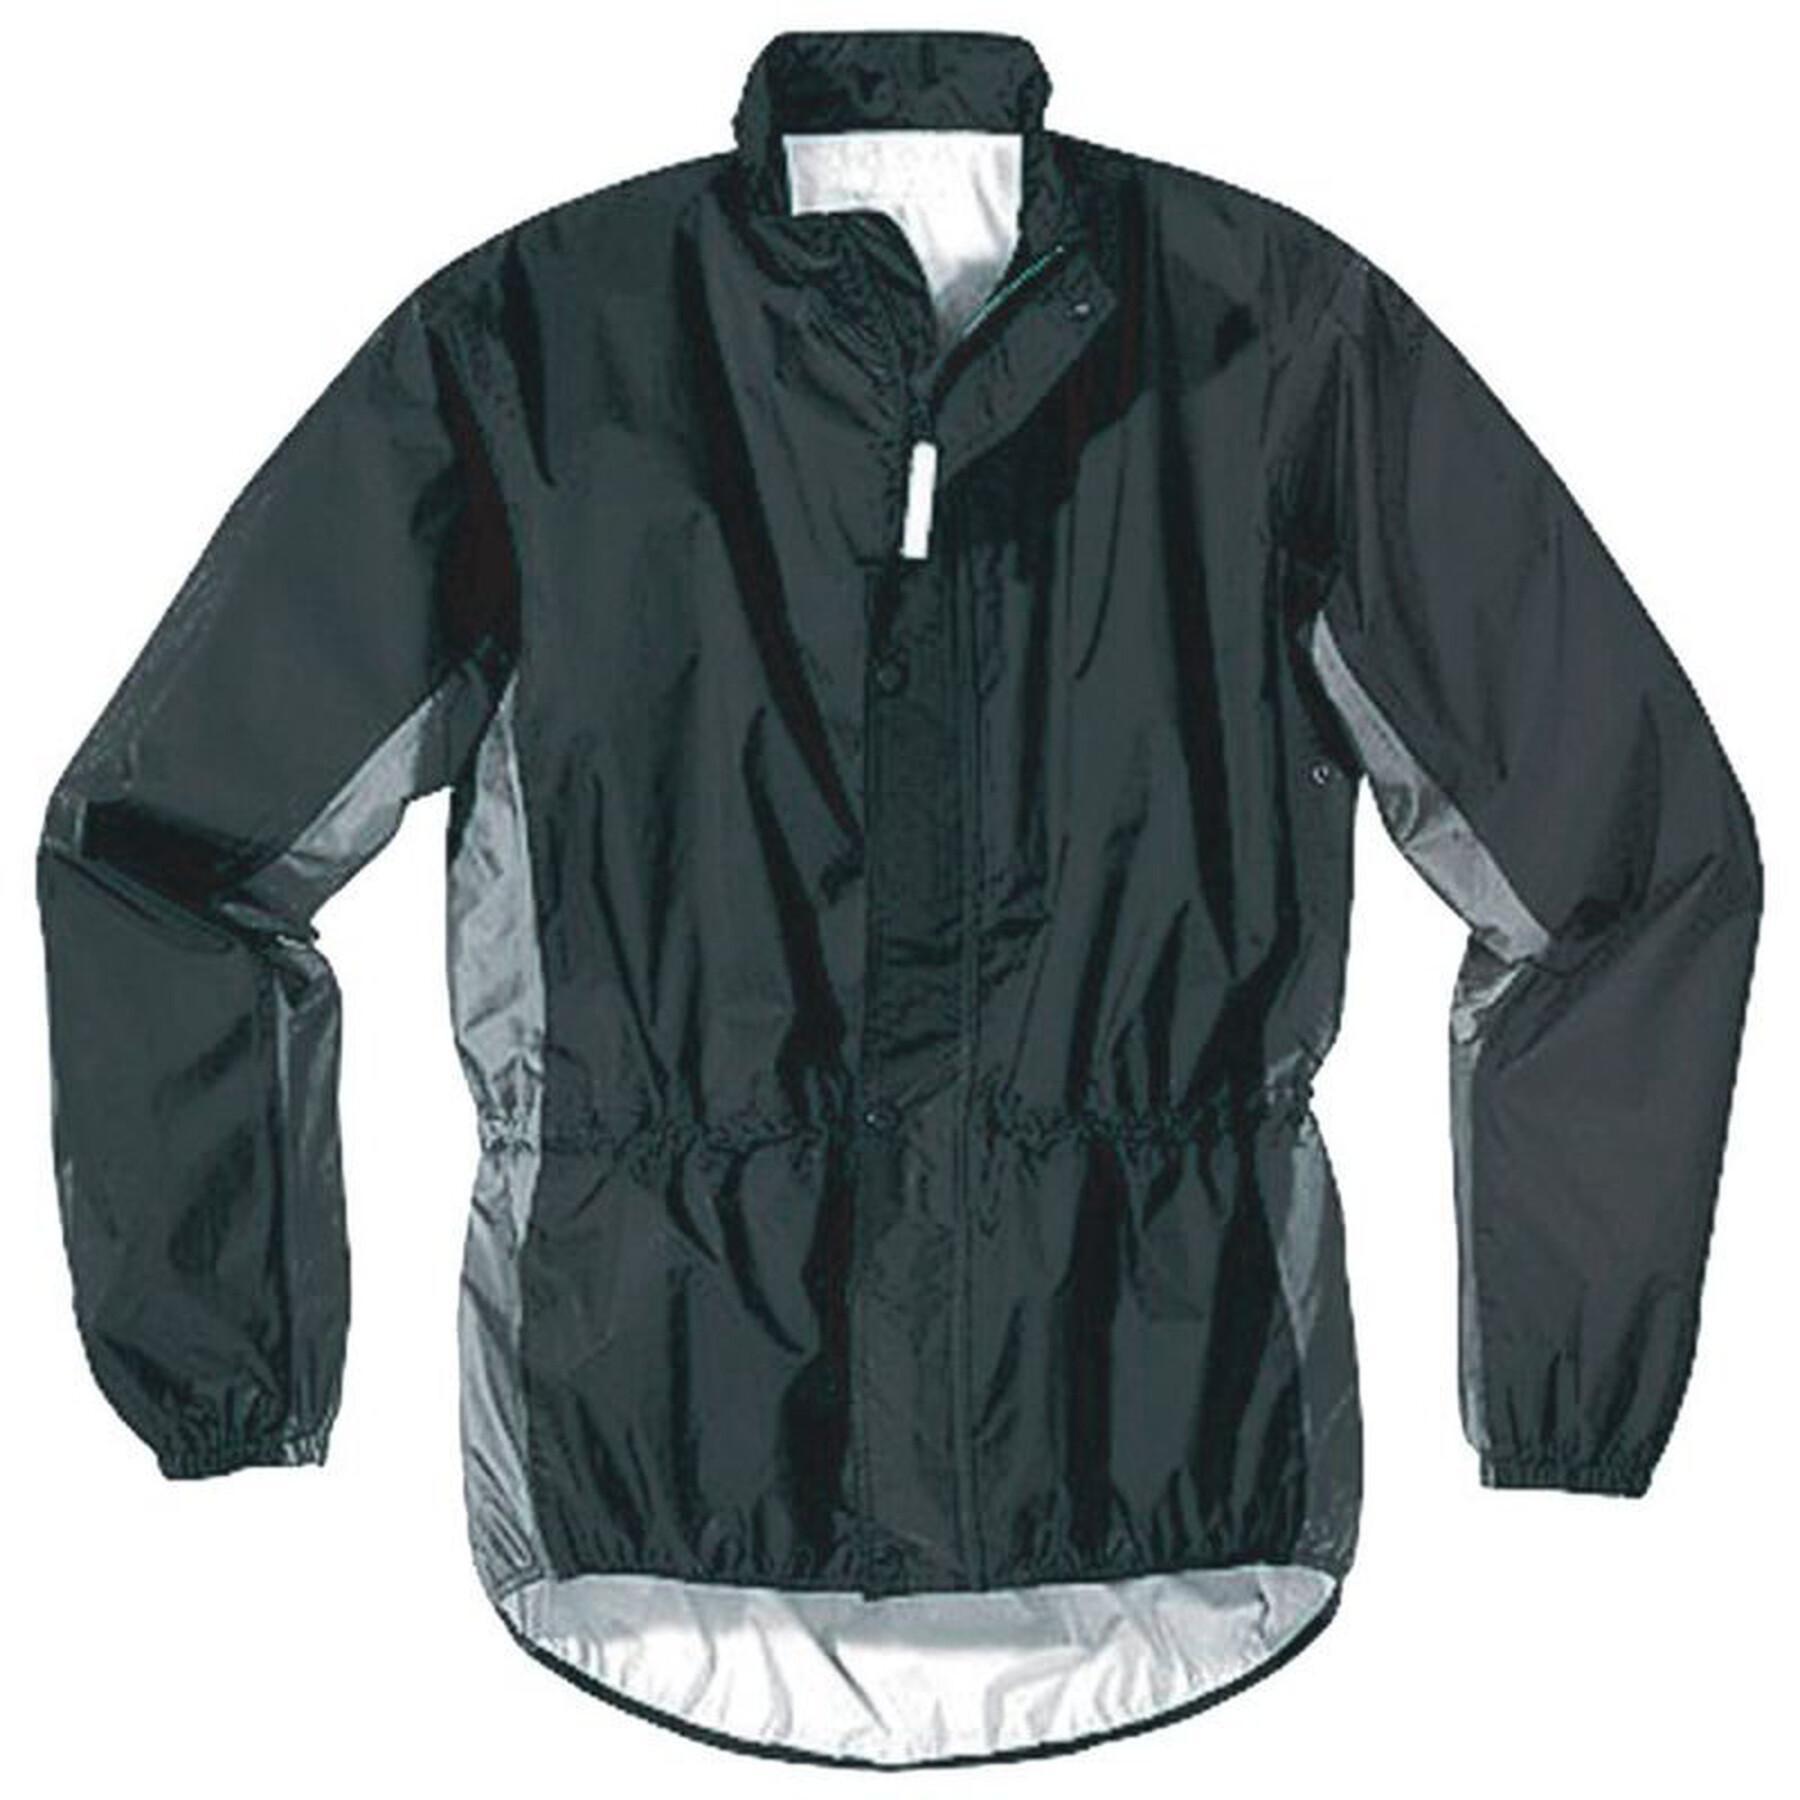 Waterproof jacket Hock rain guard